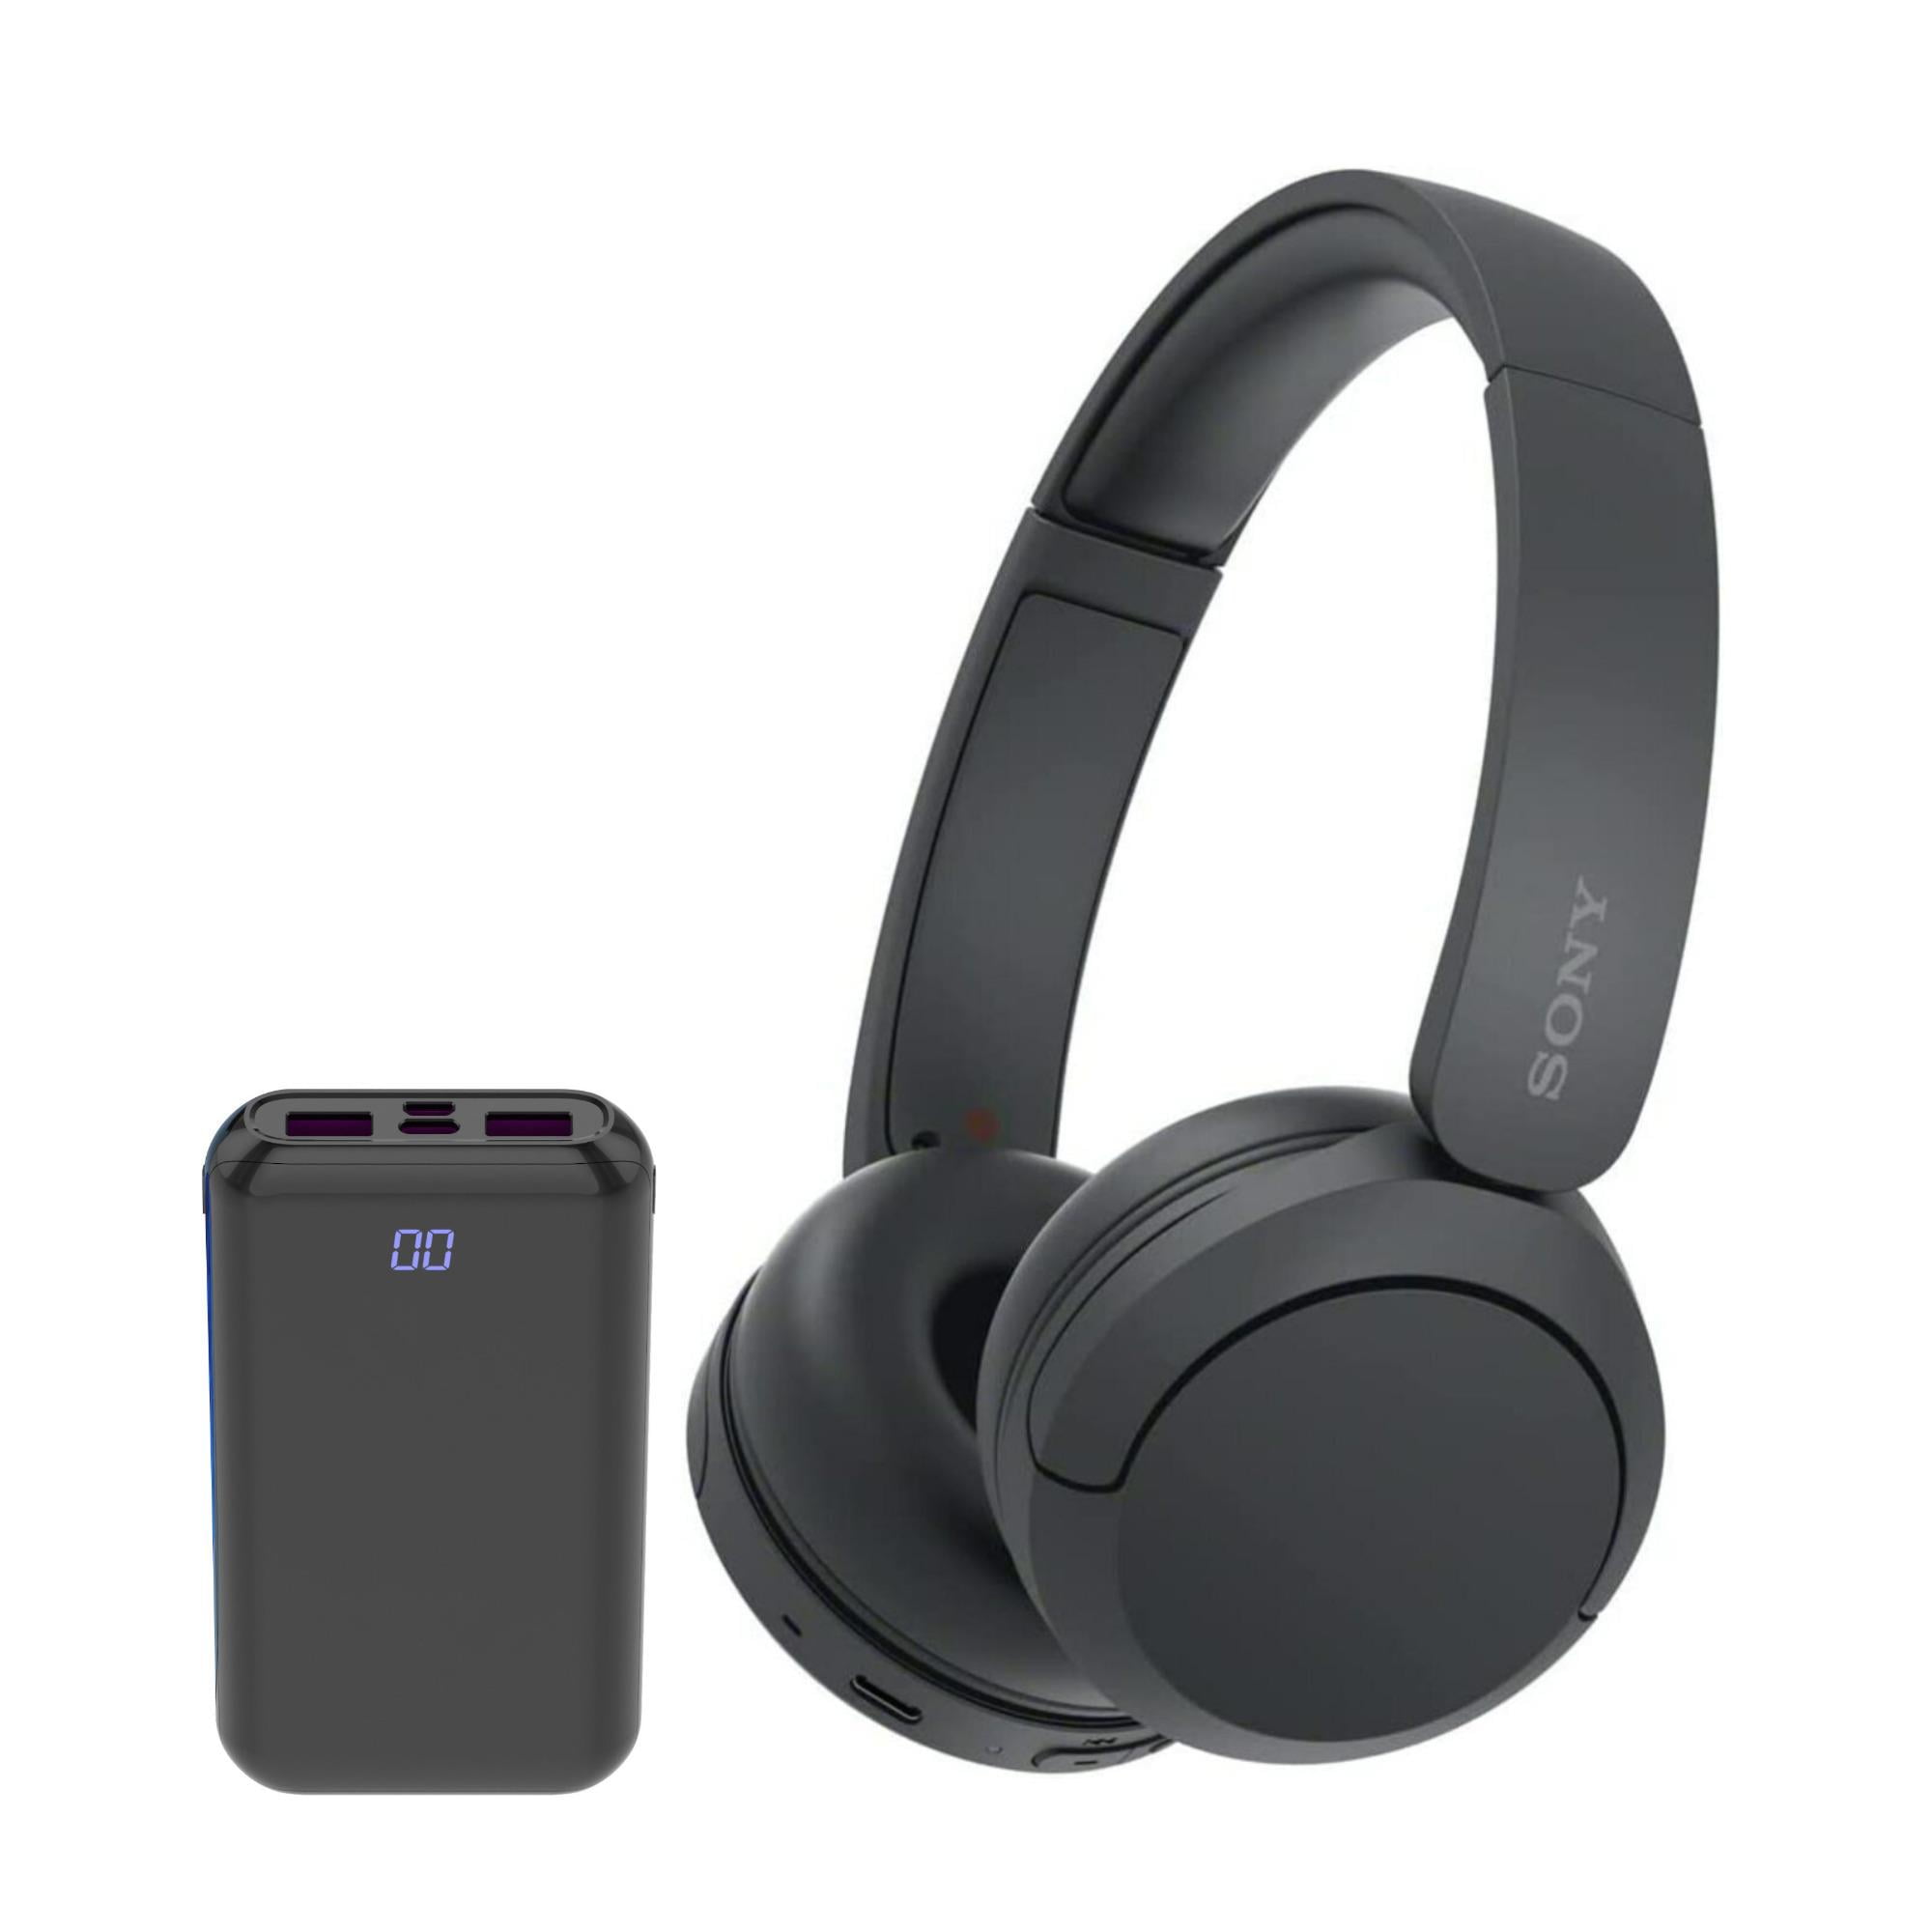 Audifonos Bluetooth Sony